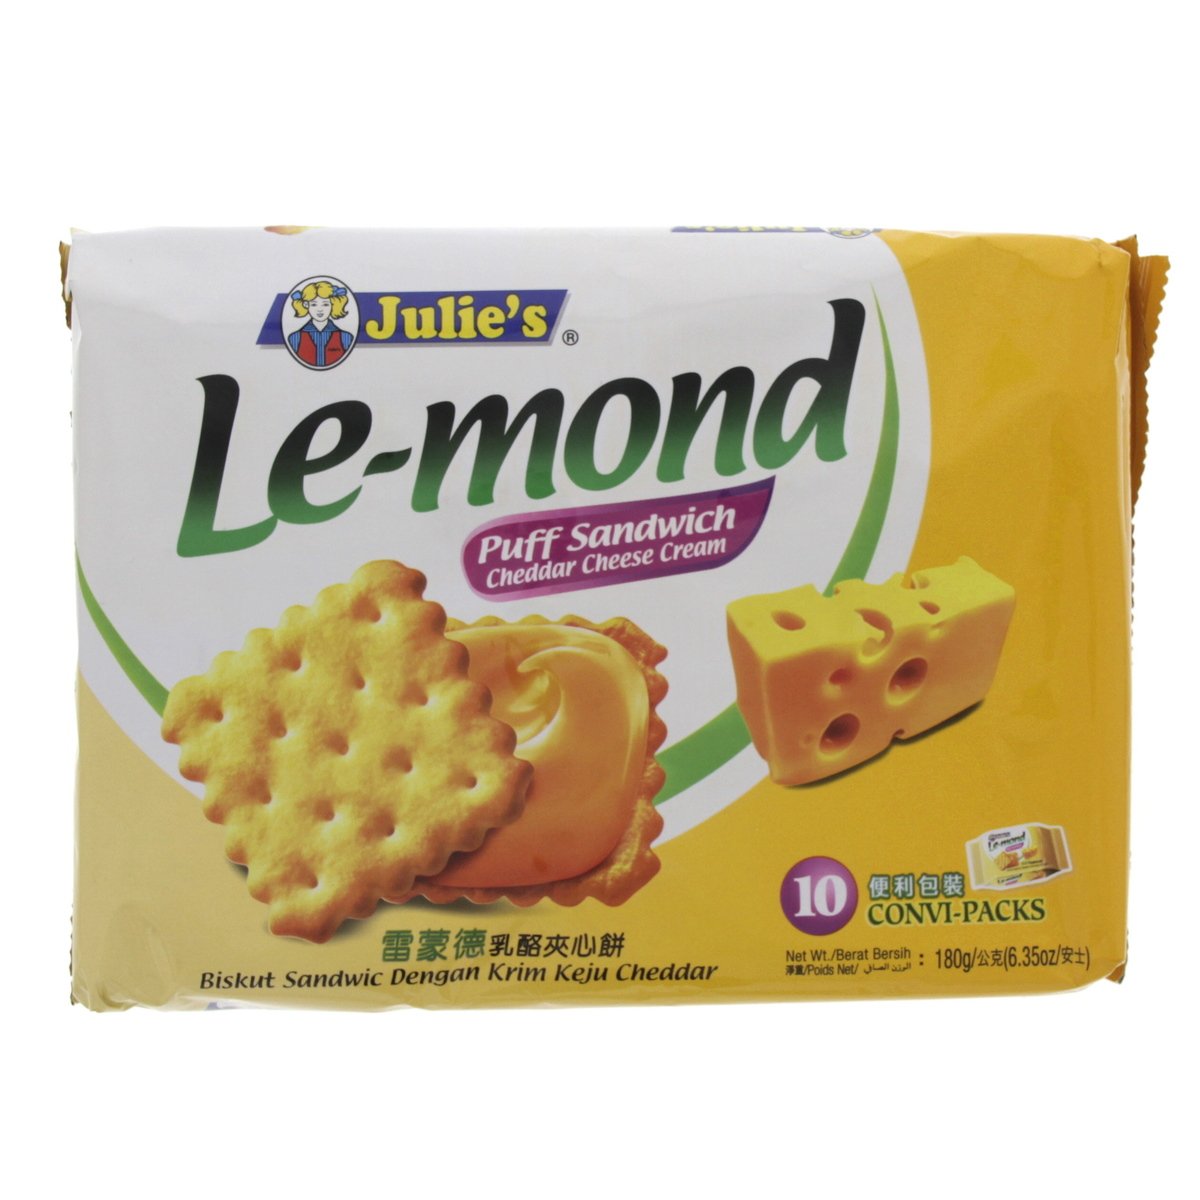 Julie's Le - Mond Puff Sandwich Cheddar Cheese Cream Biscuits 180 g